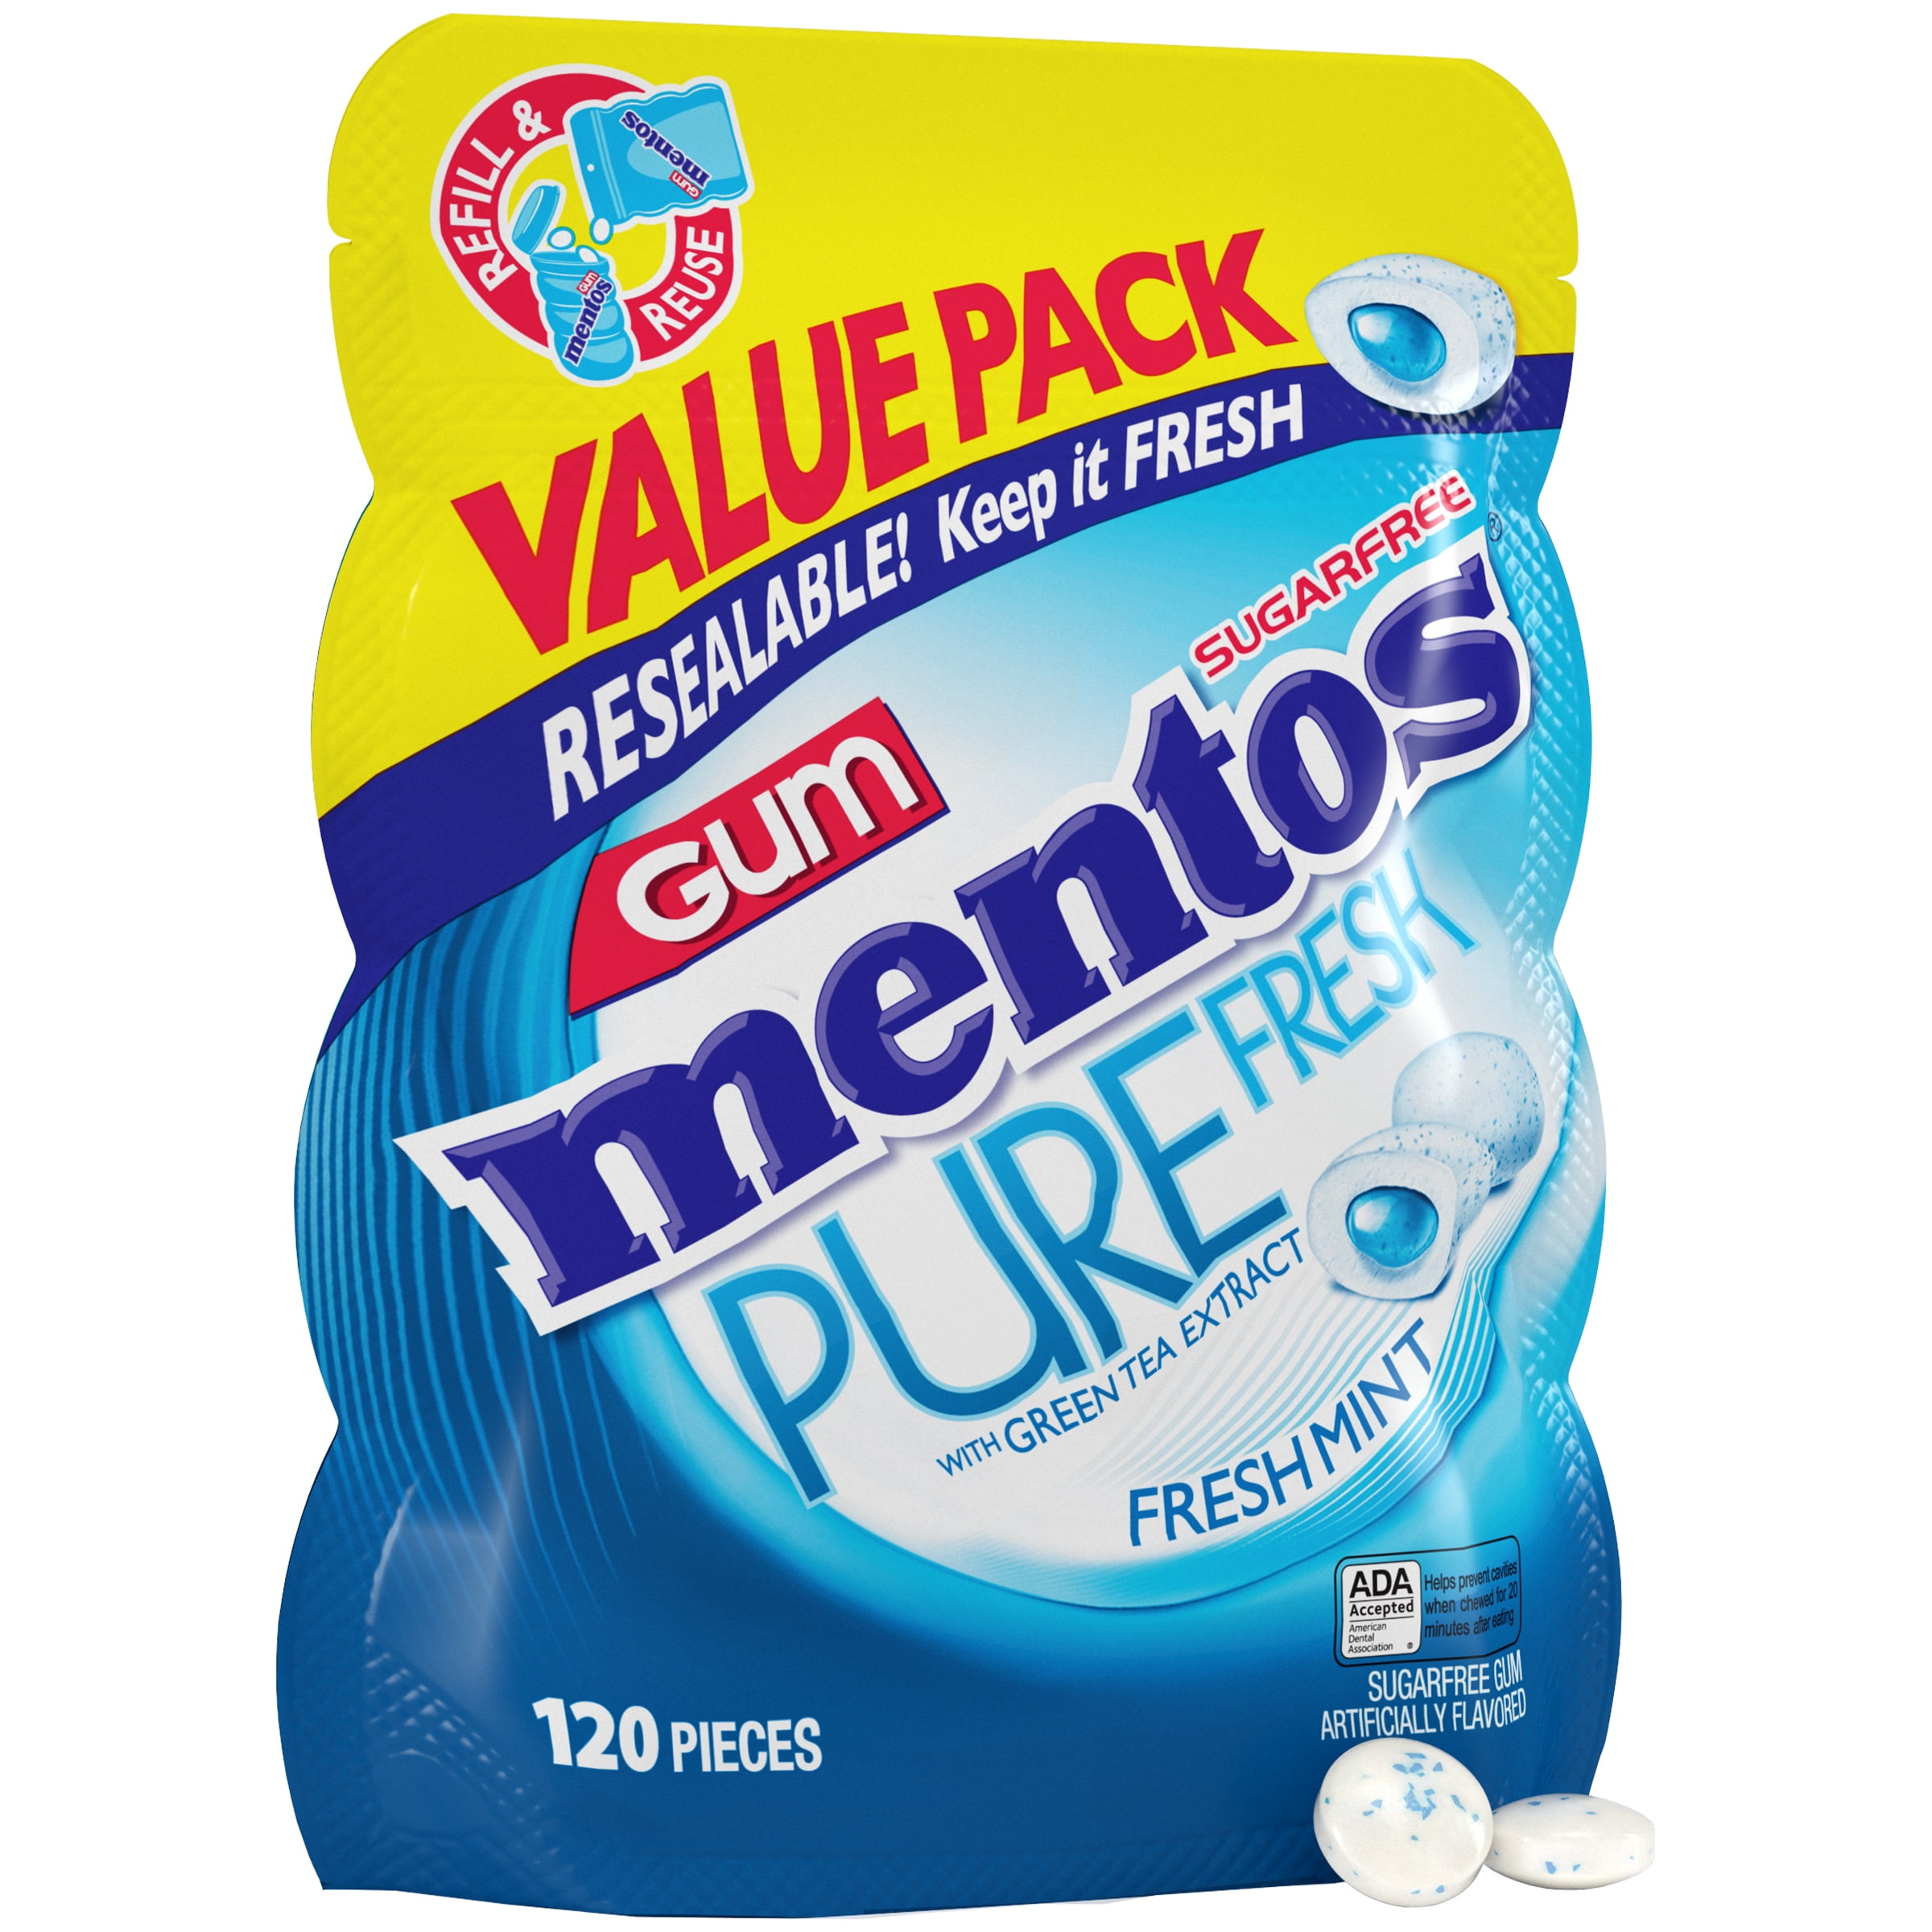 Achat / Vente Mentos Chewing-gum tropical pure fresh sans sucres, 100g